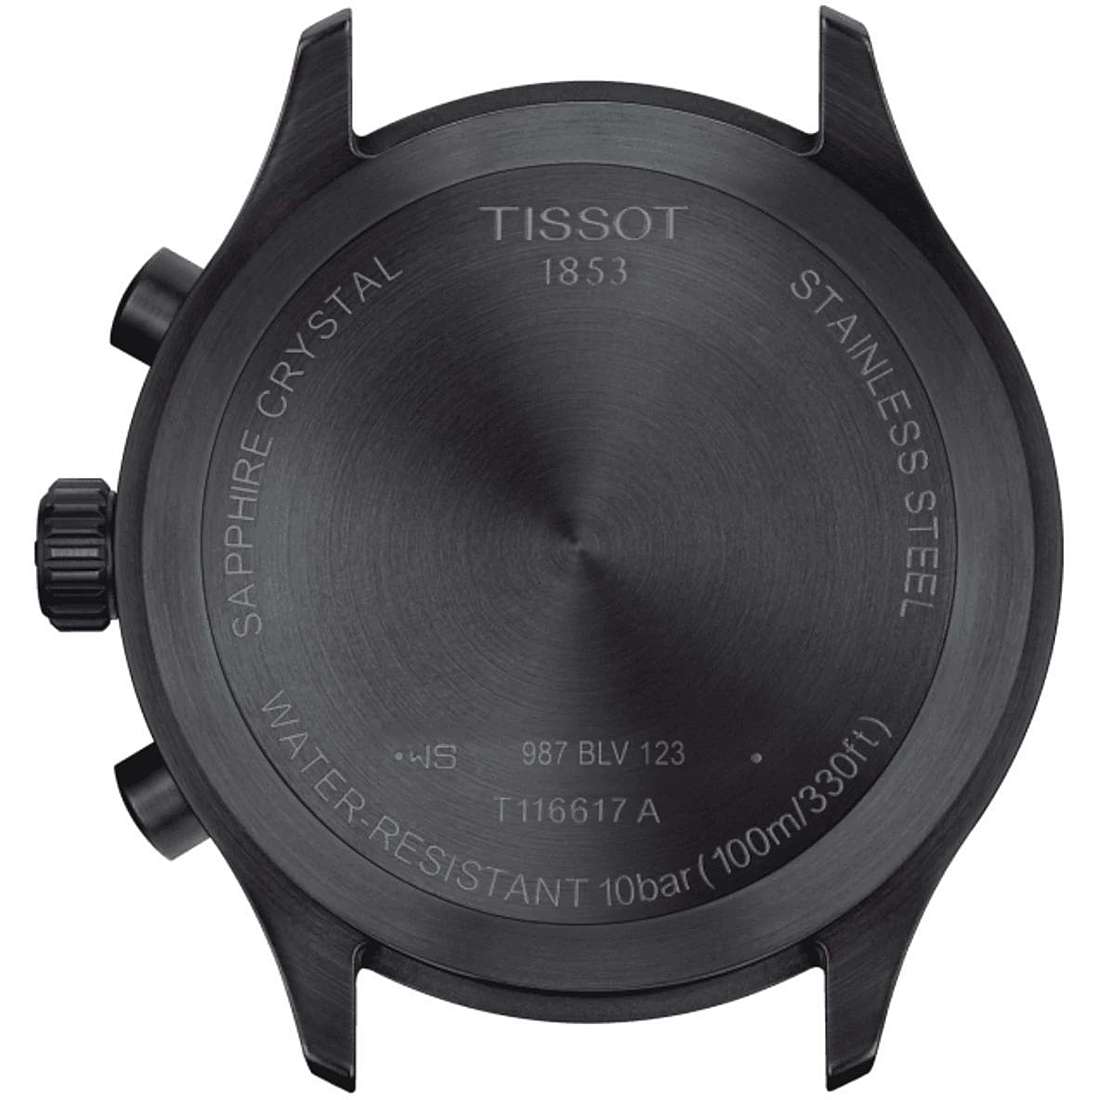 orologio cronografo uomo Tissot T-Sport Xl T1166173605203